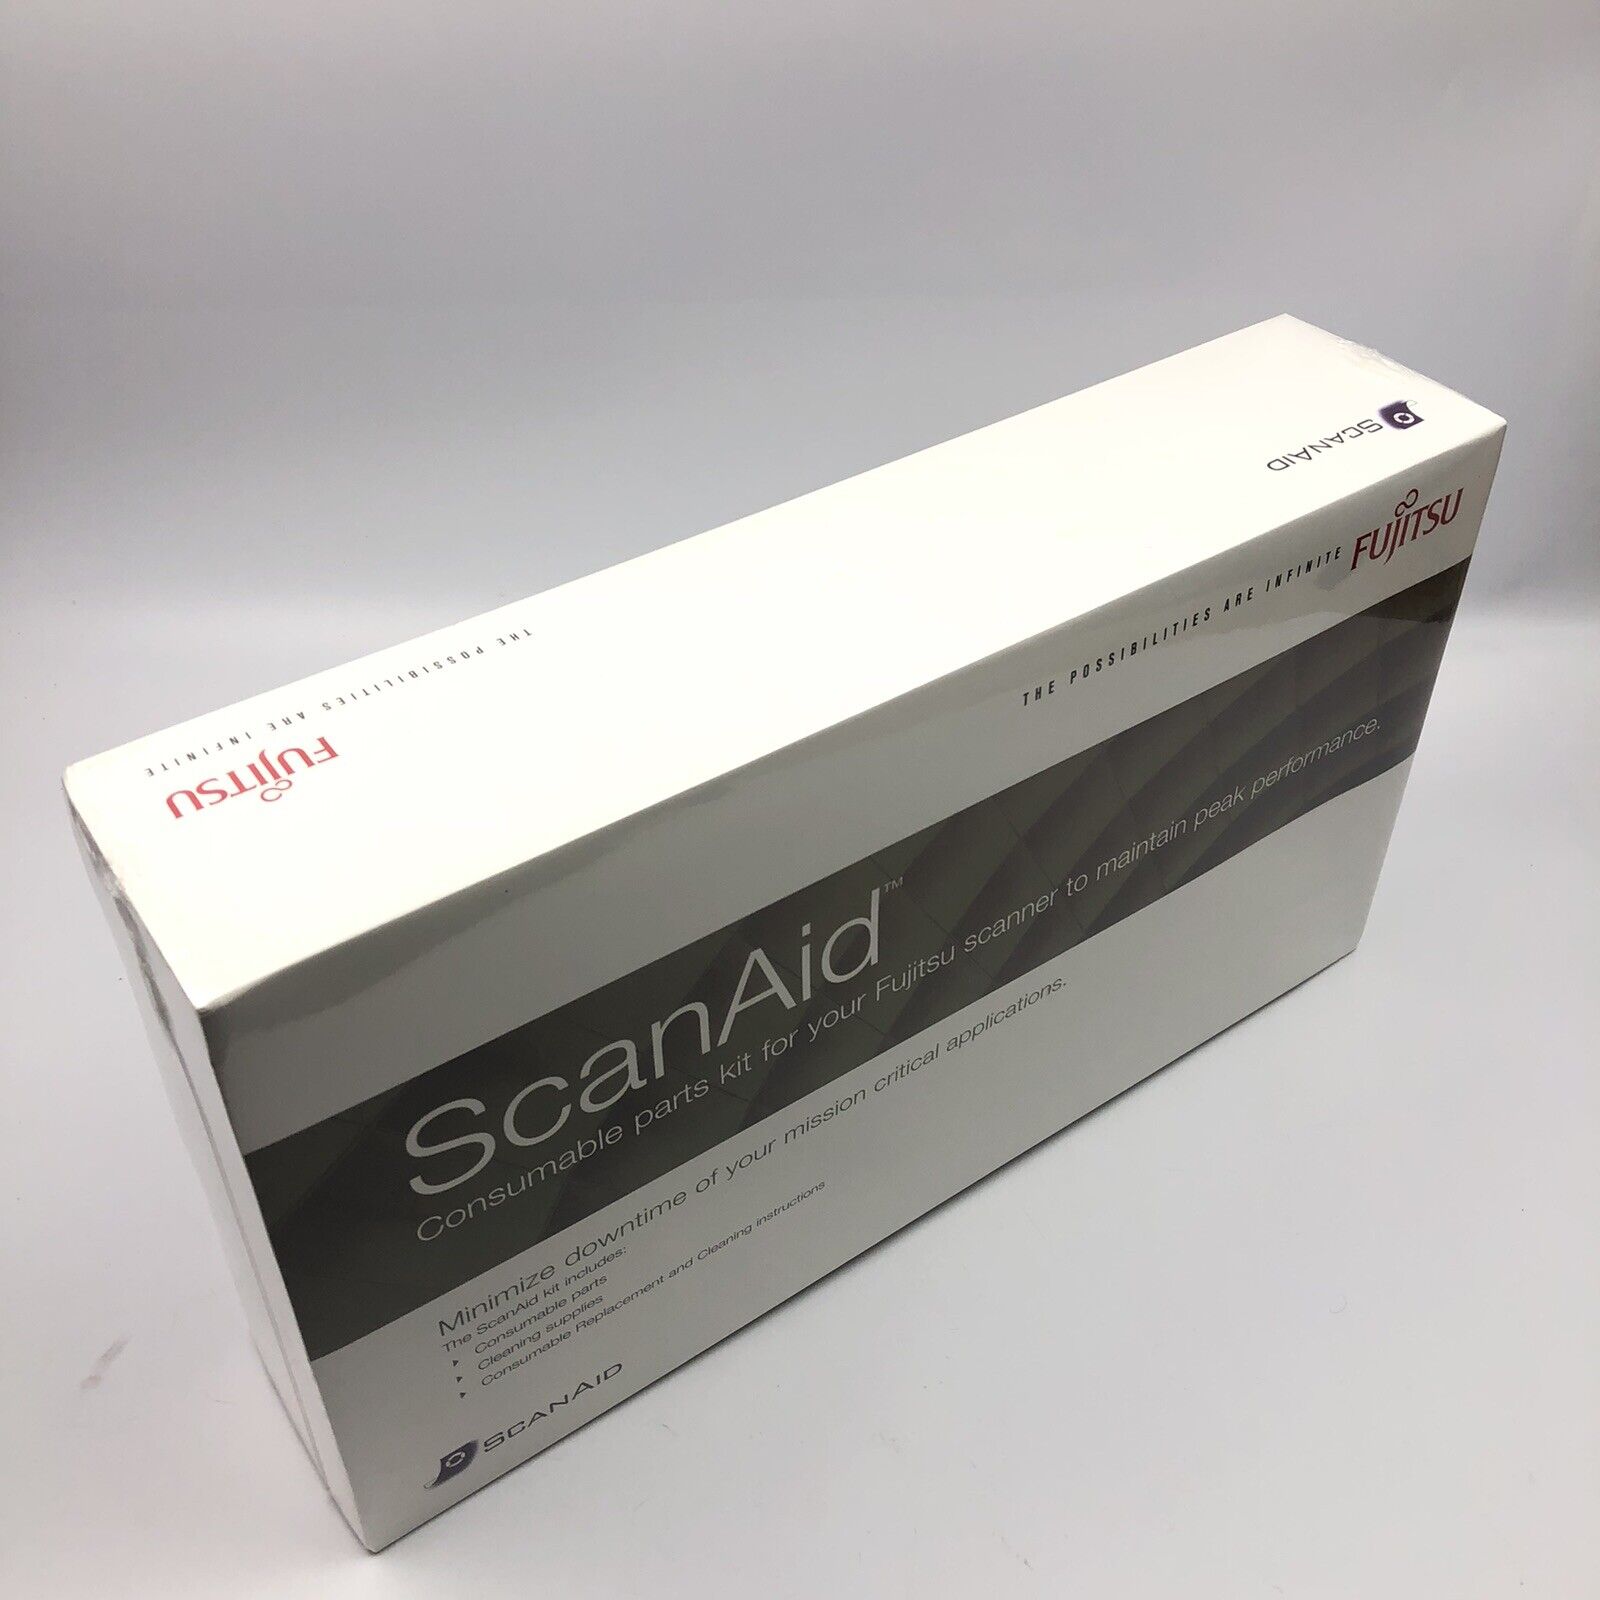 Fujitsu ScanAid - CG01000-524801 - Single kit - New Unopened